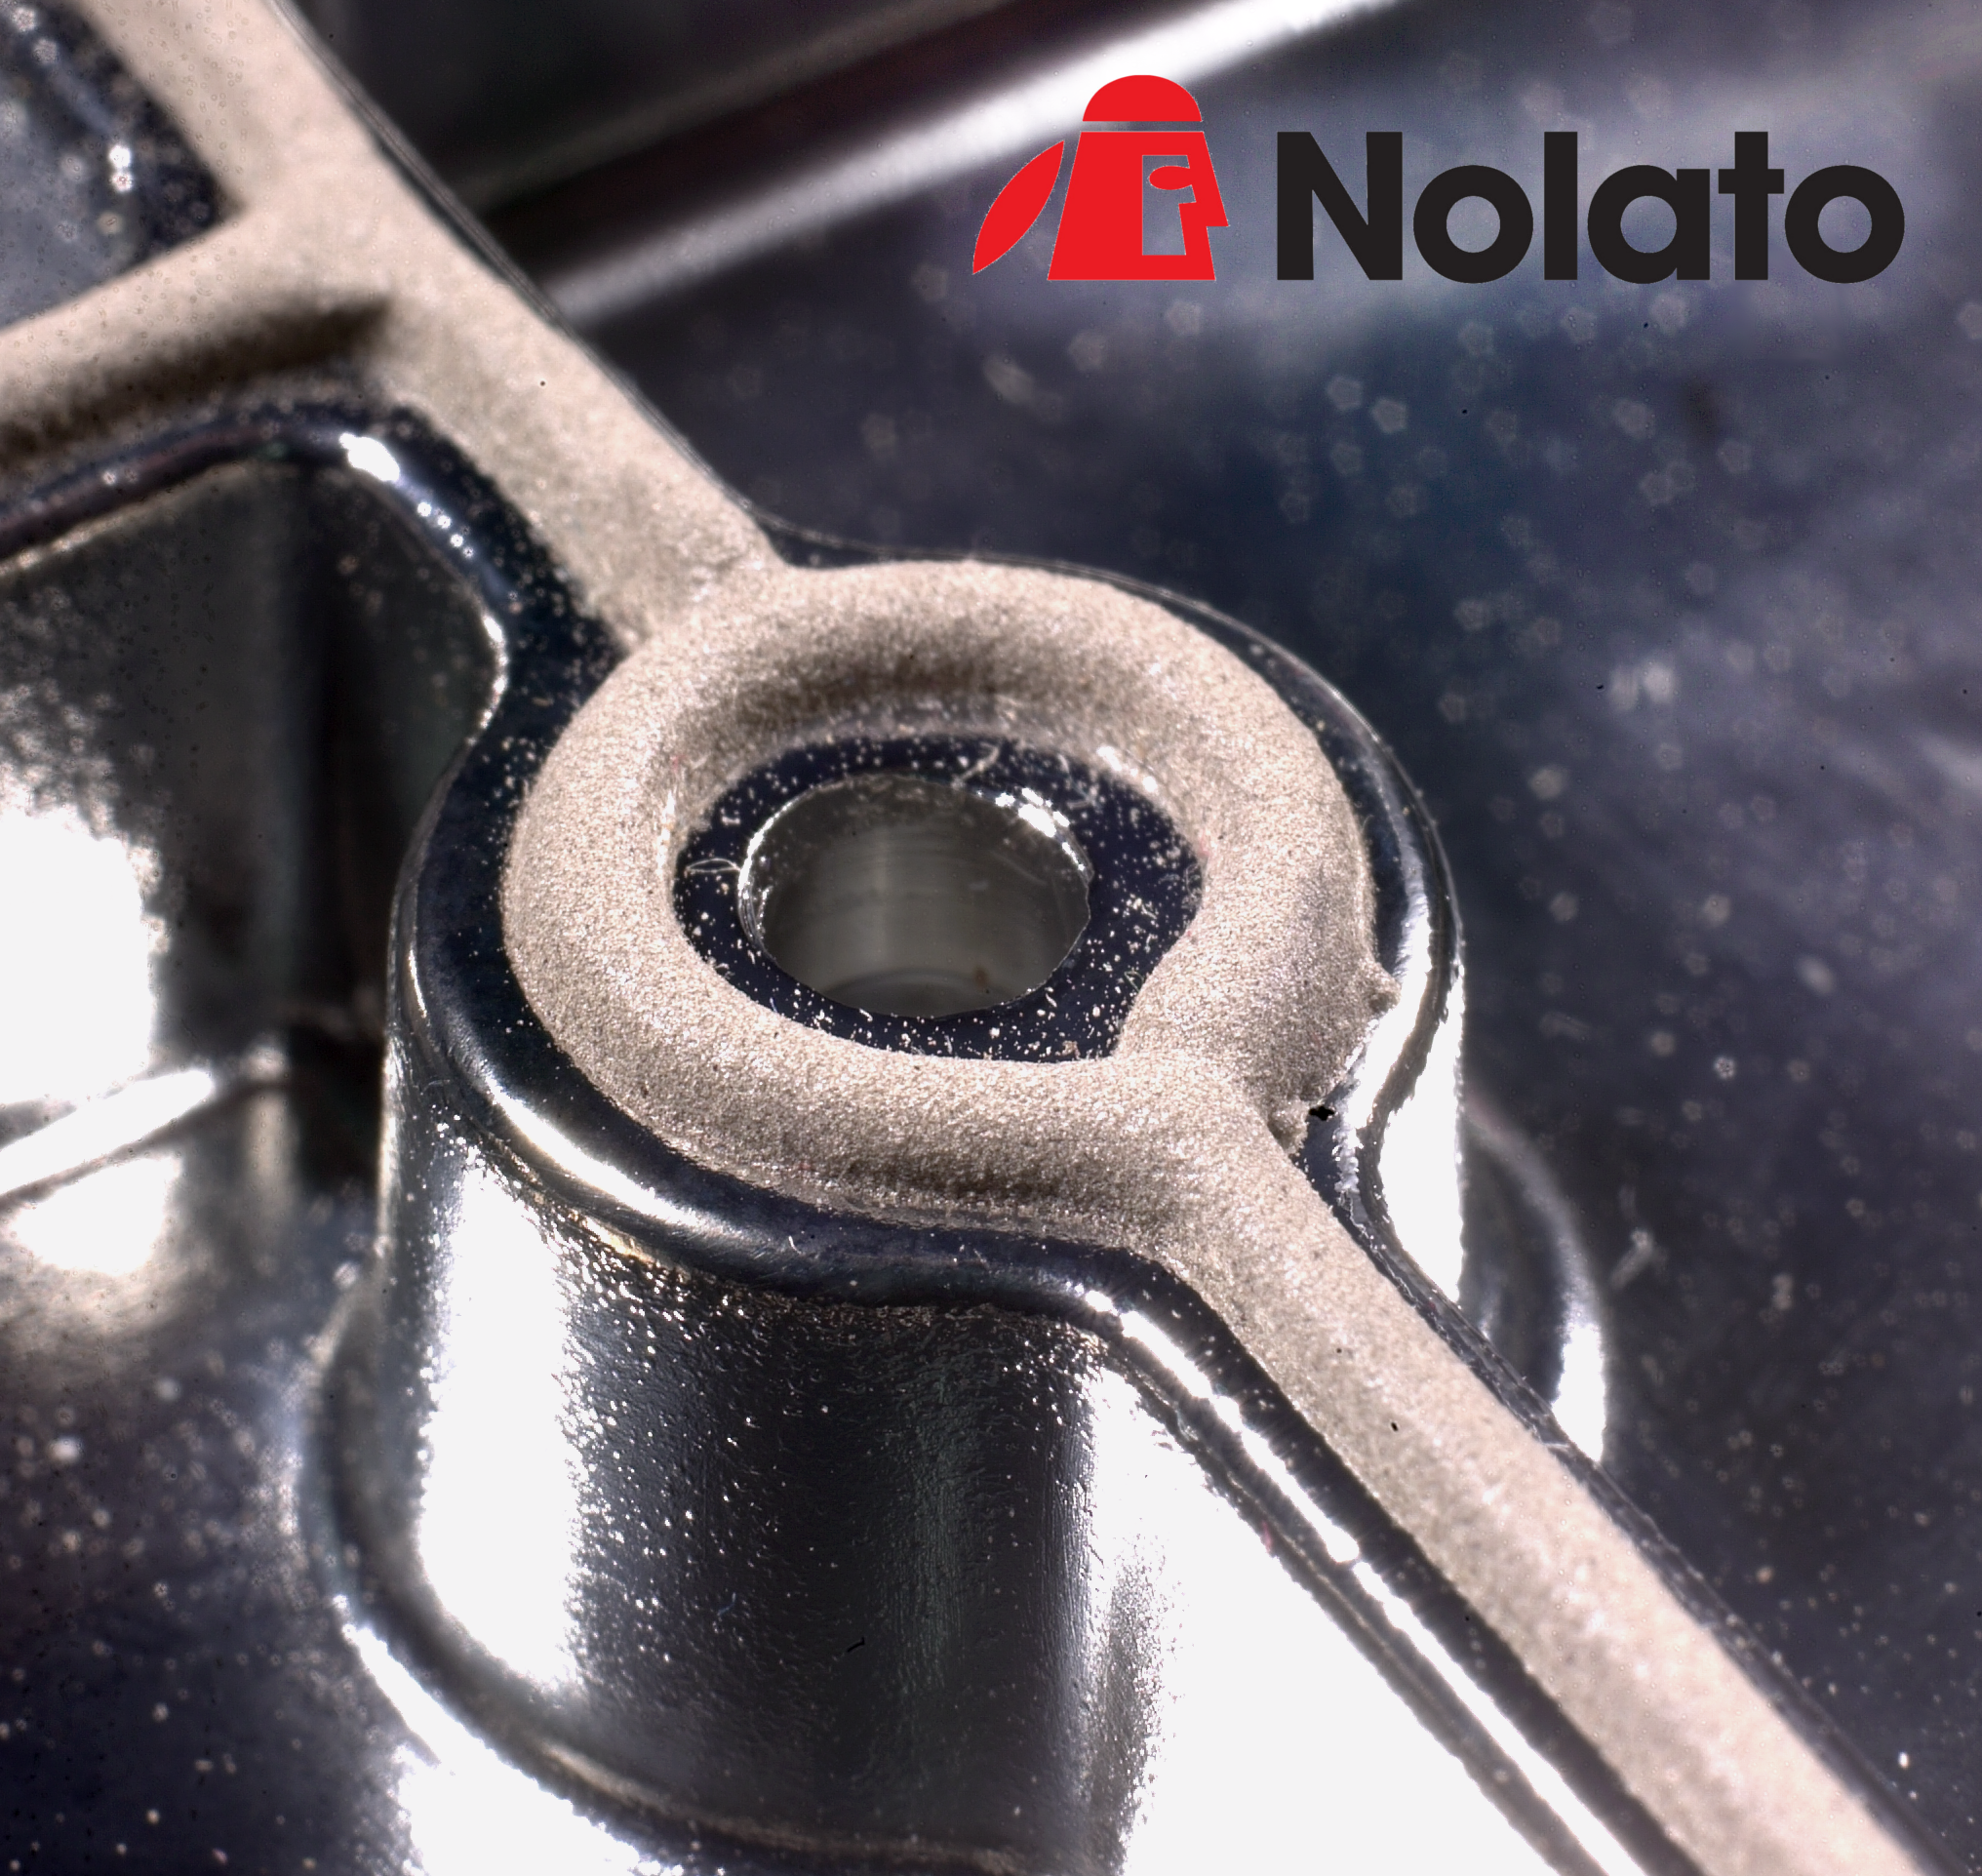 Nolato Form-in-Place Gasket Materials